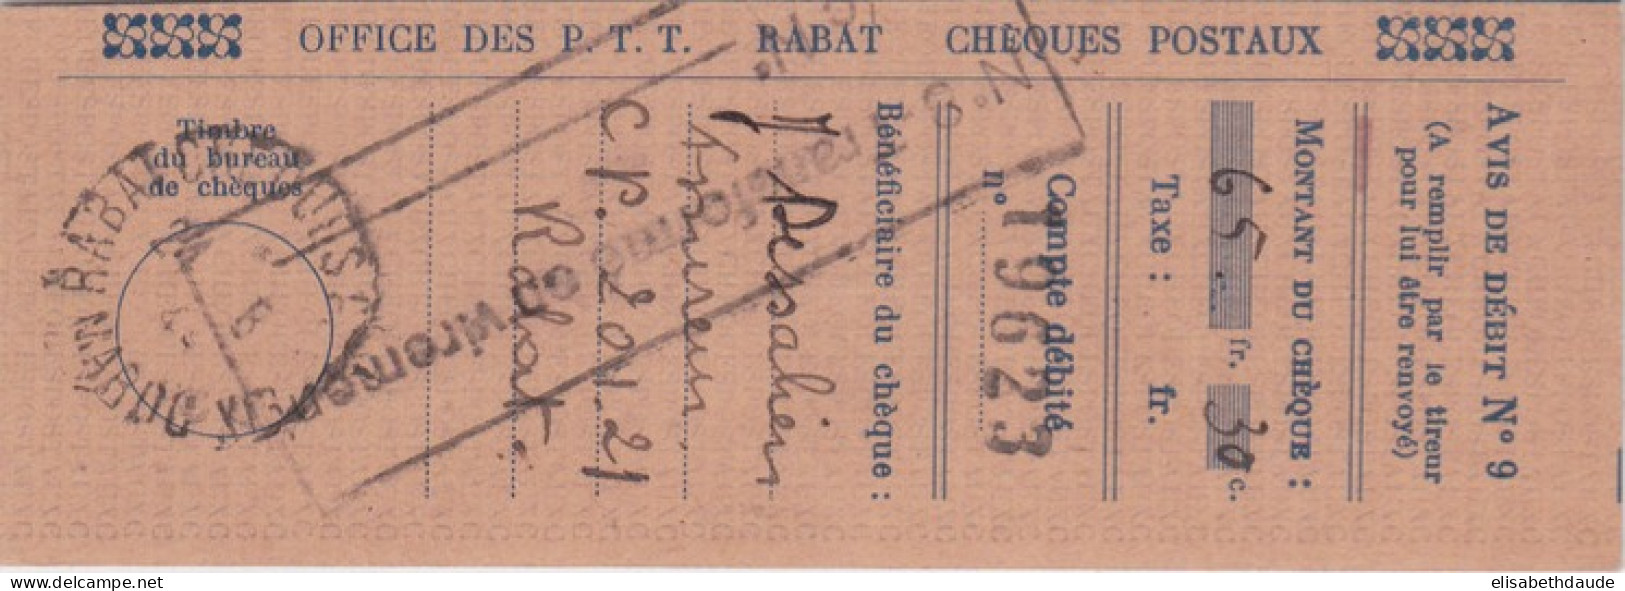 MAROC - 1944 - RECEPISSE D'AVIS De DEBIT D'un CHEQUE POSTAL De RABAT - Lettres & Documents